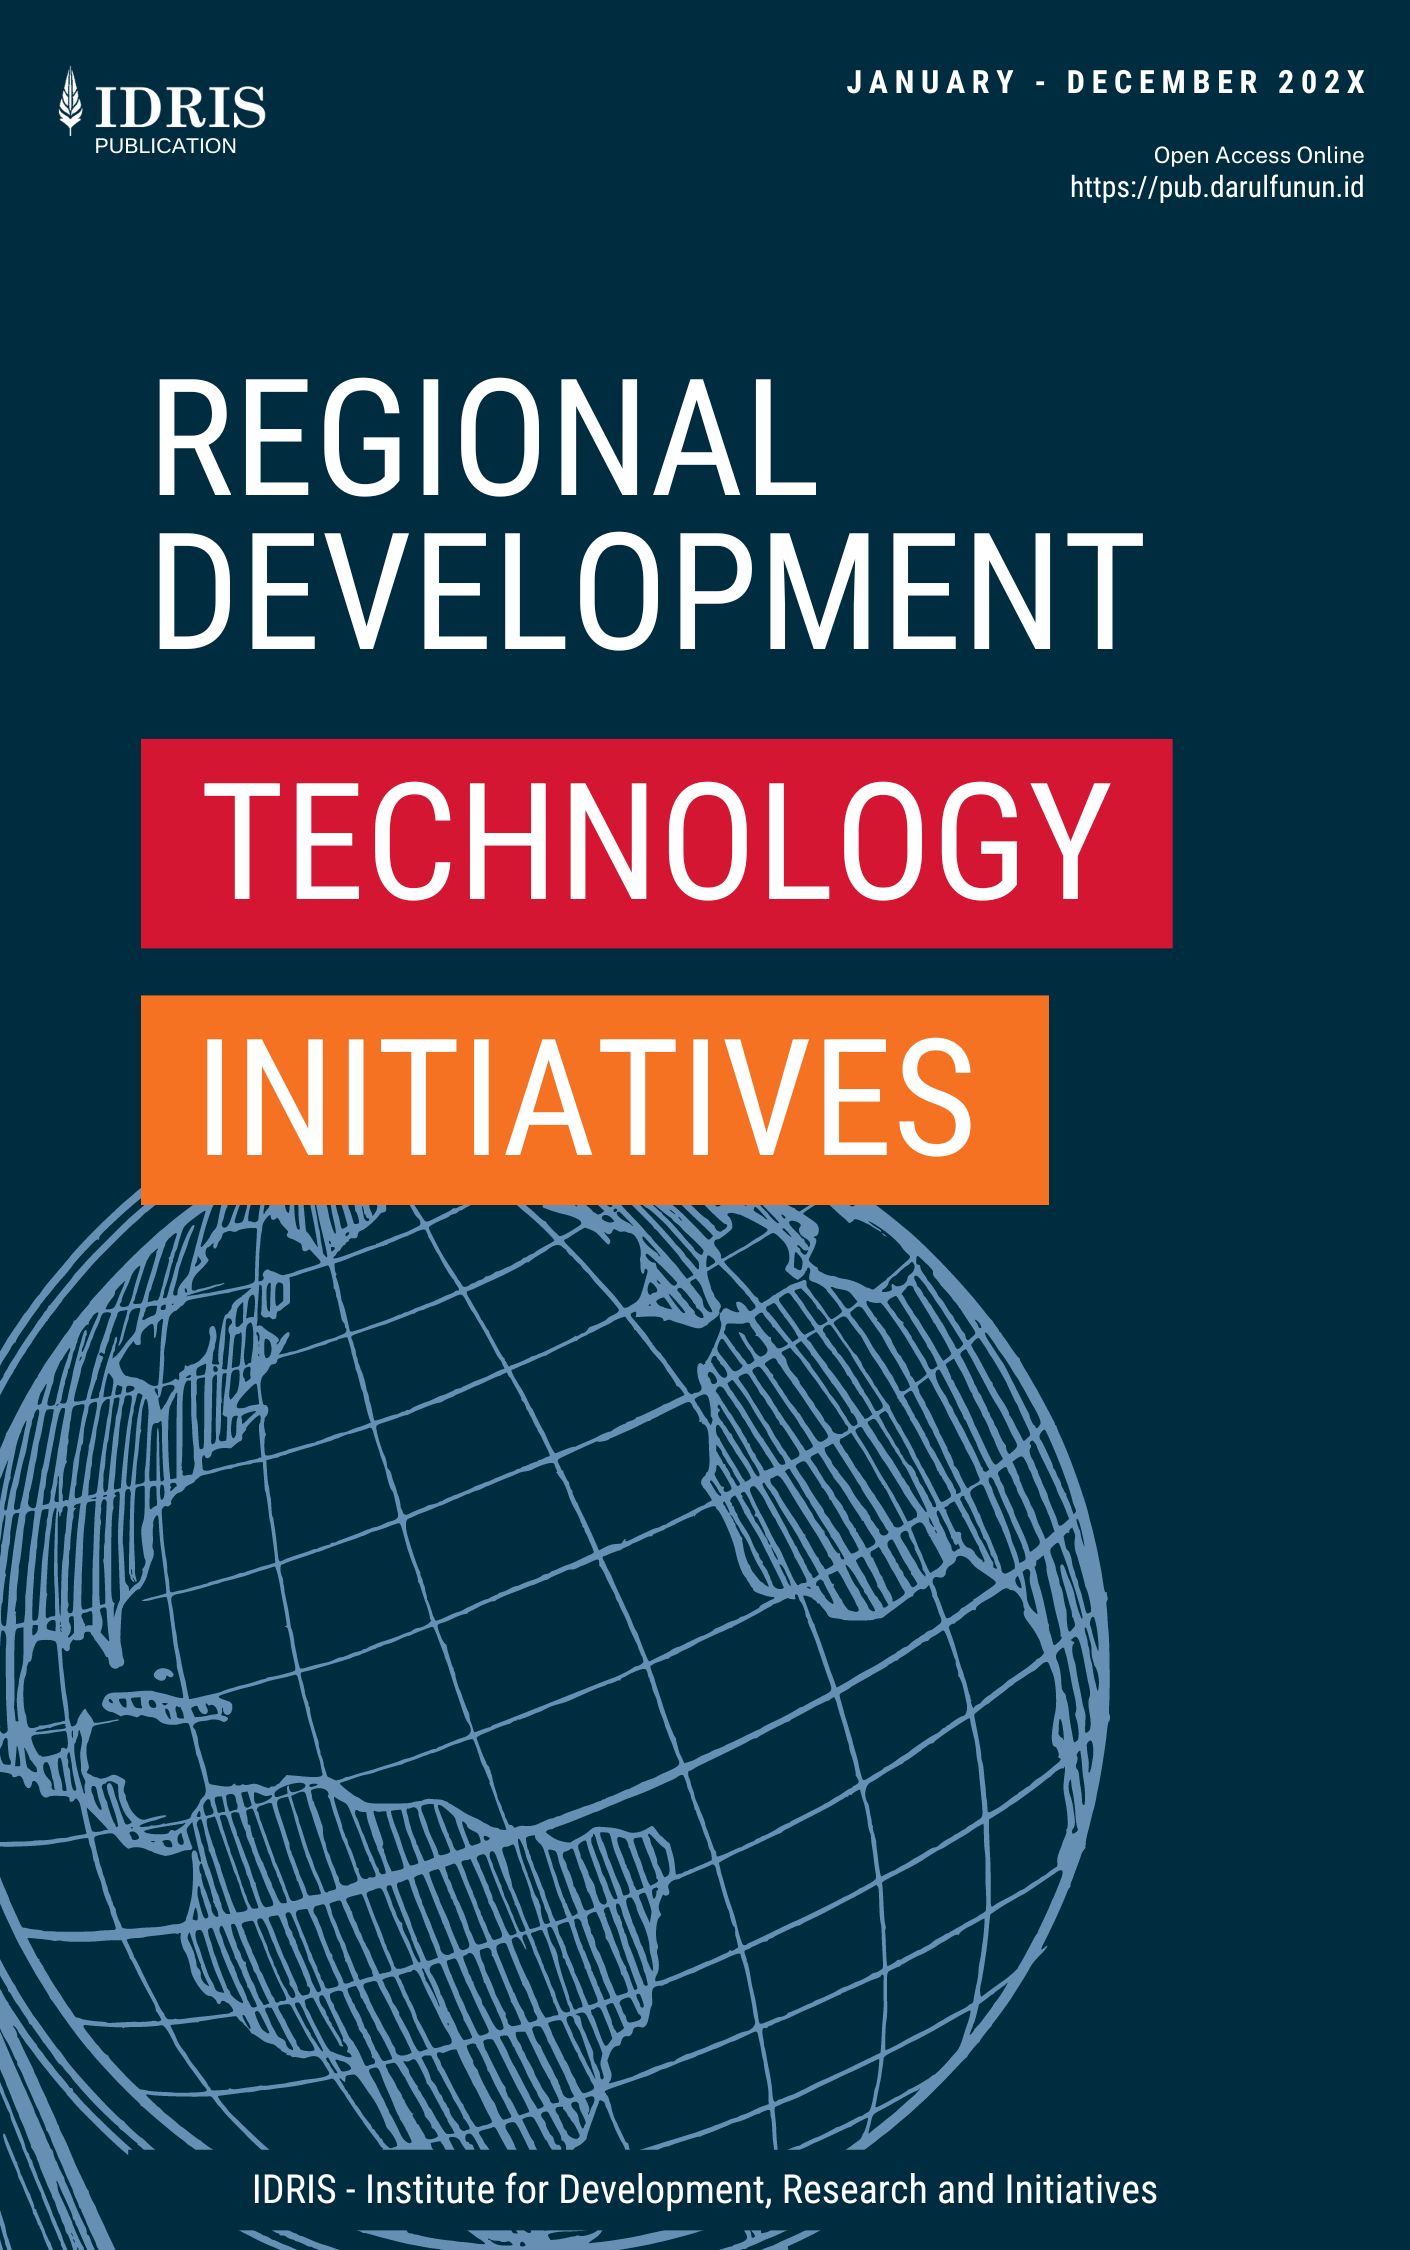 RDTI - Regional Development and Technology Initiatives